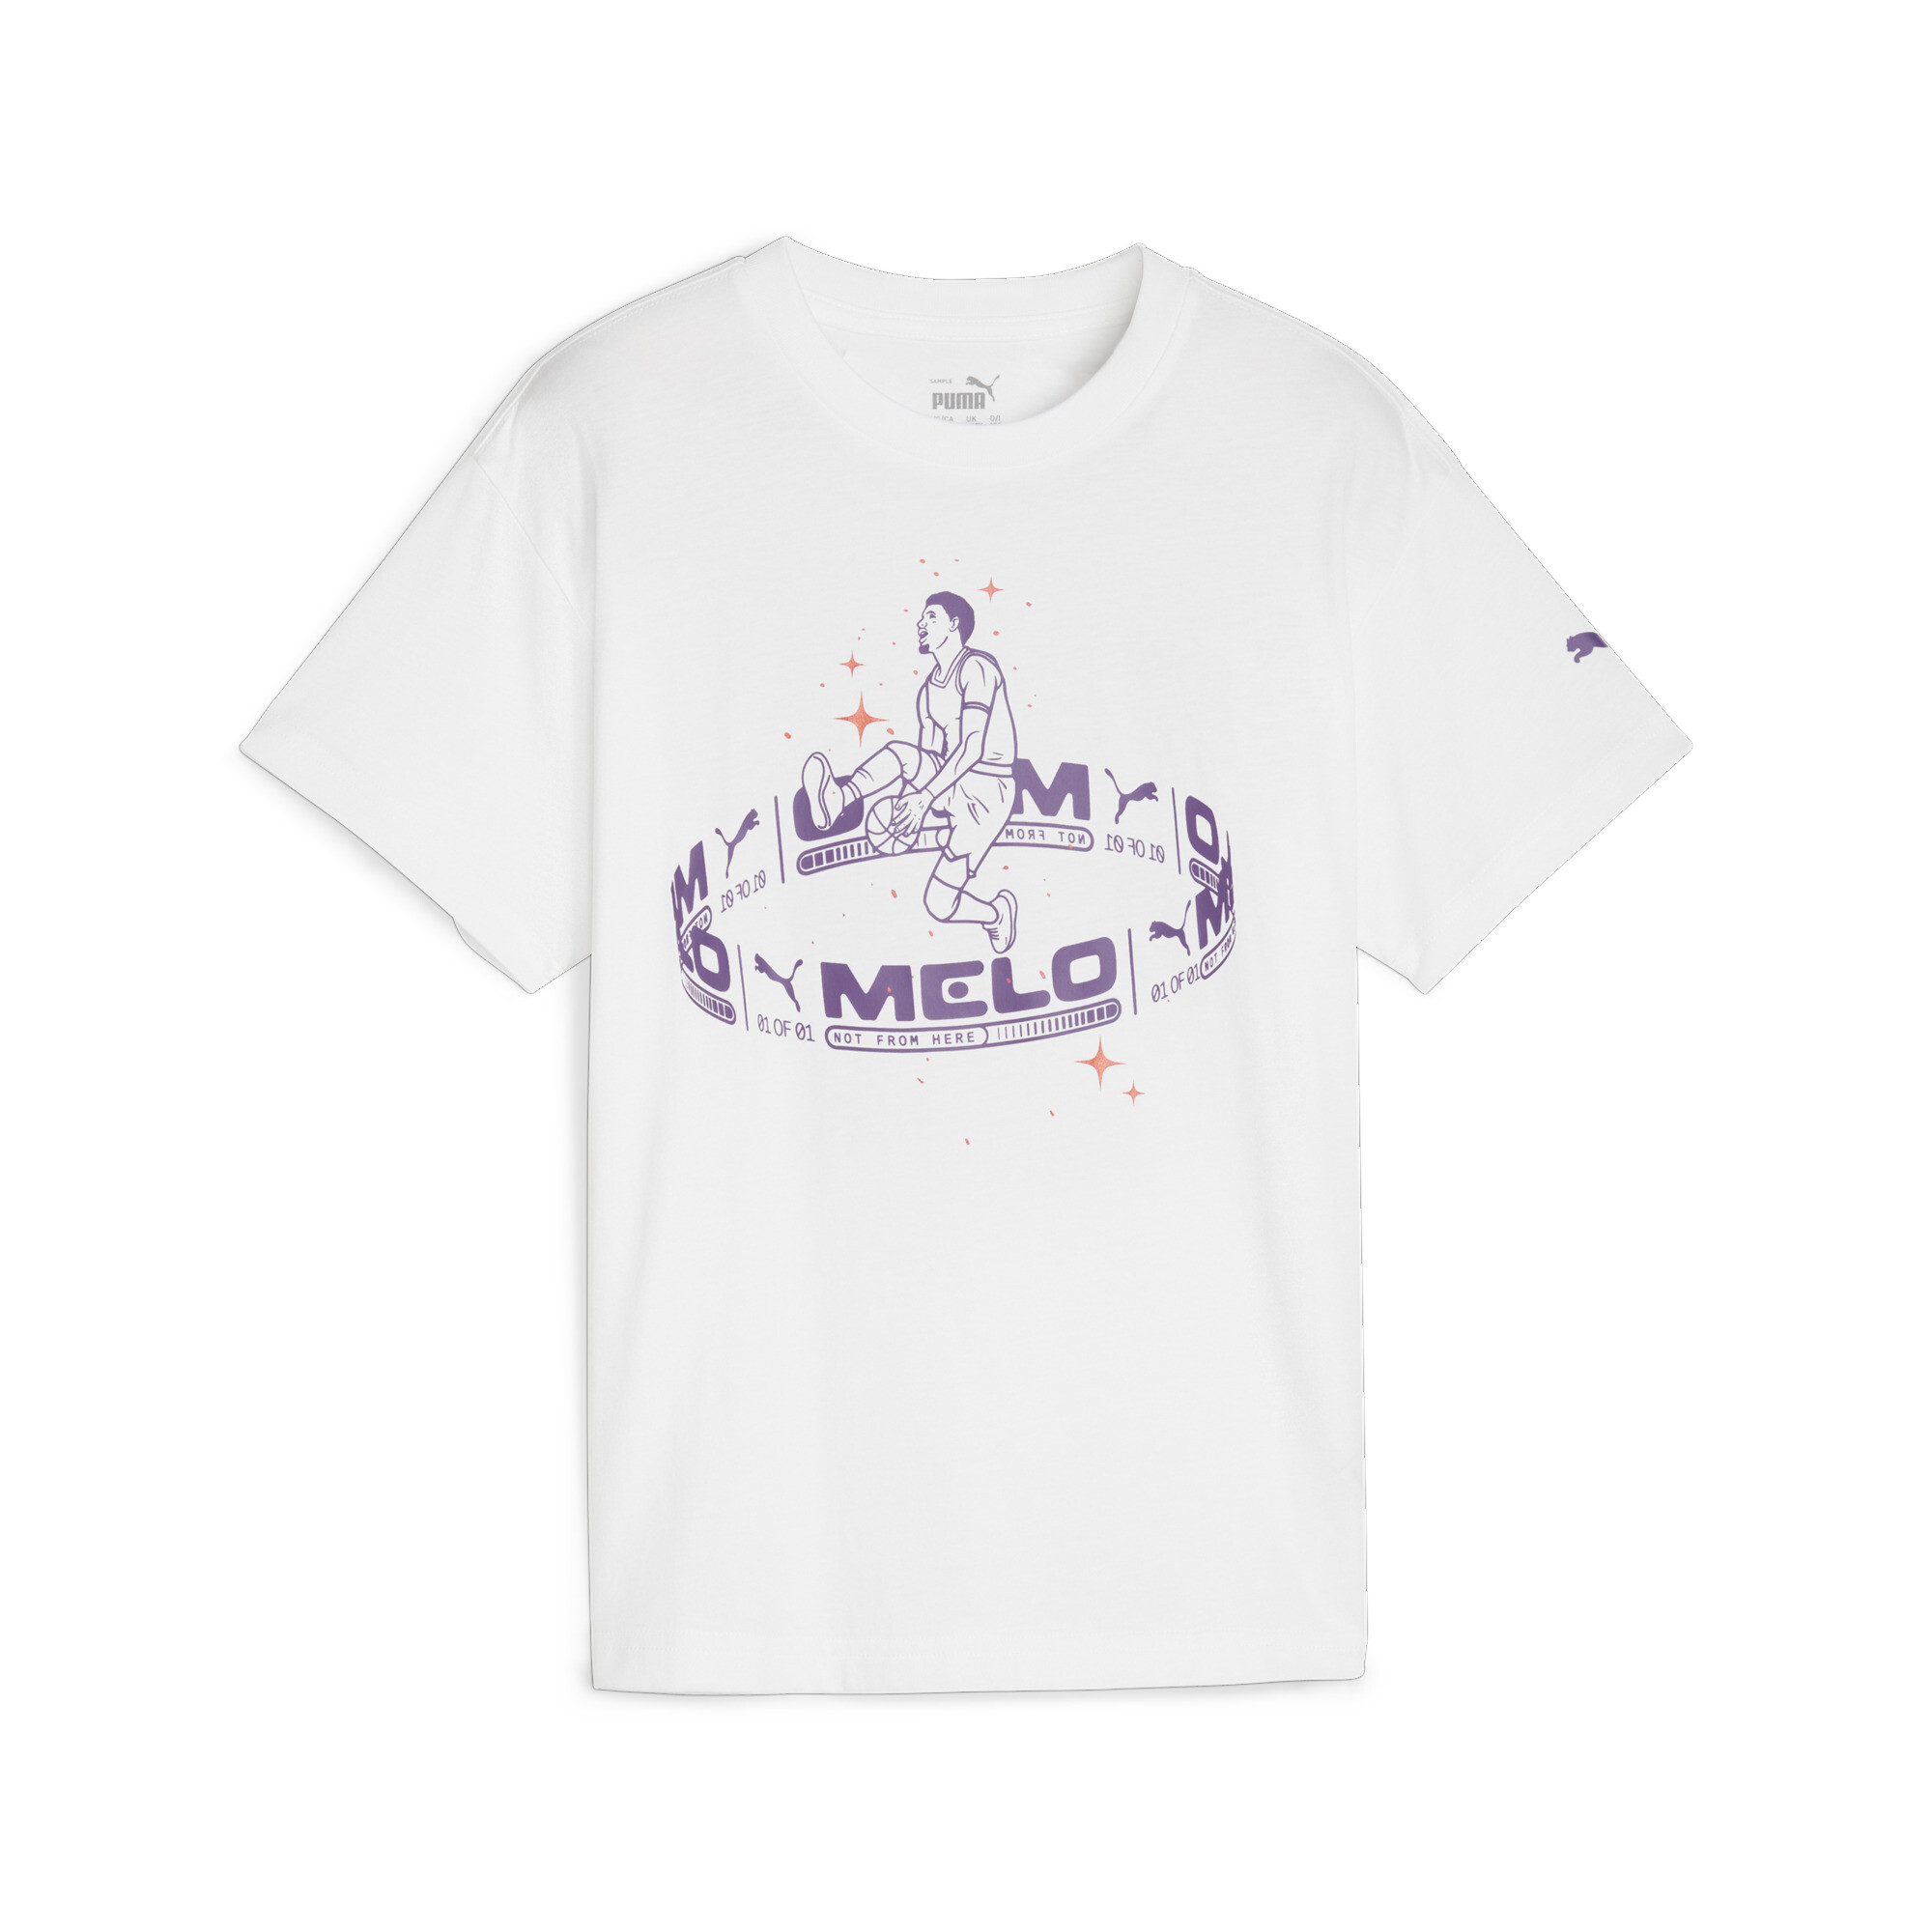 Puma MELO IRIDESCENT Boys' T-Shirt, White, Size 15-16Y, Age